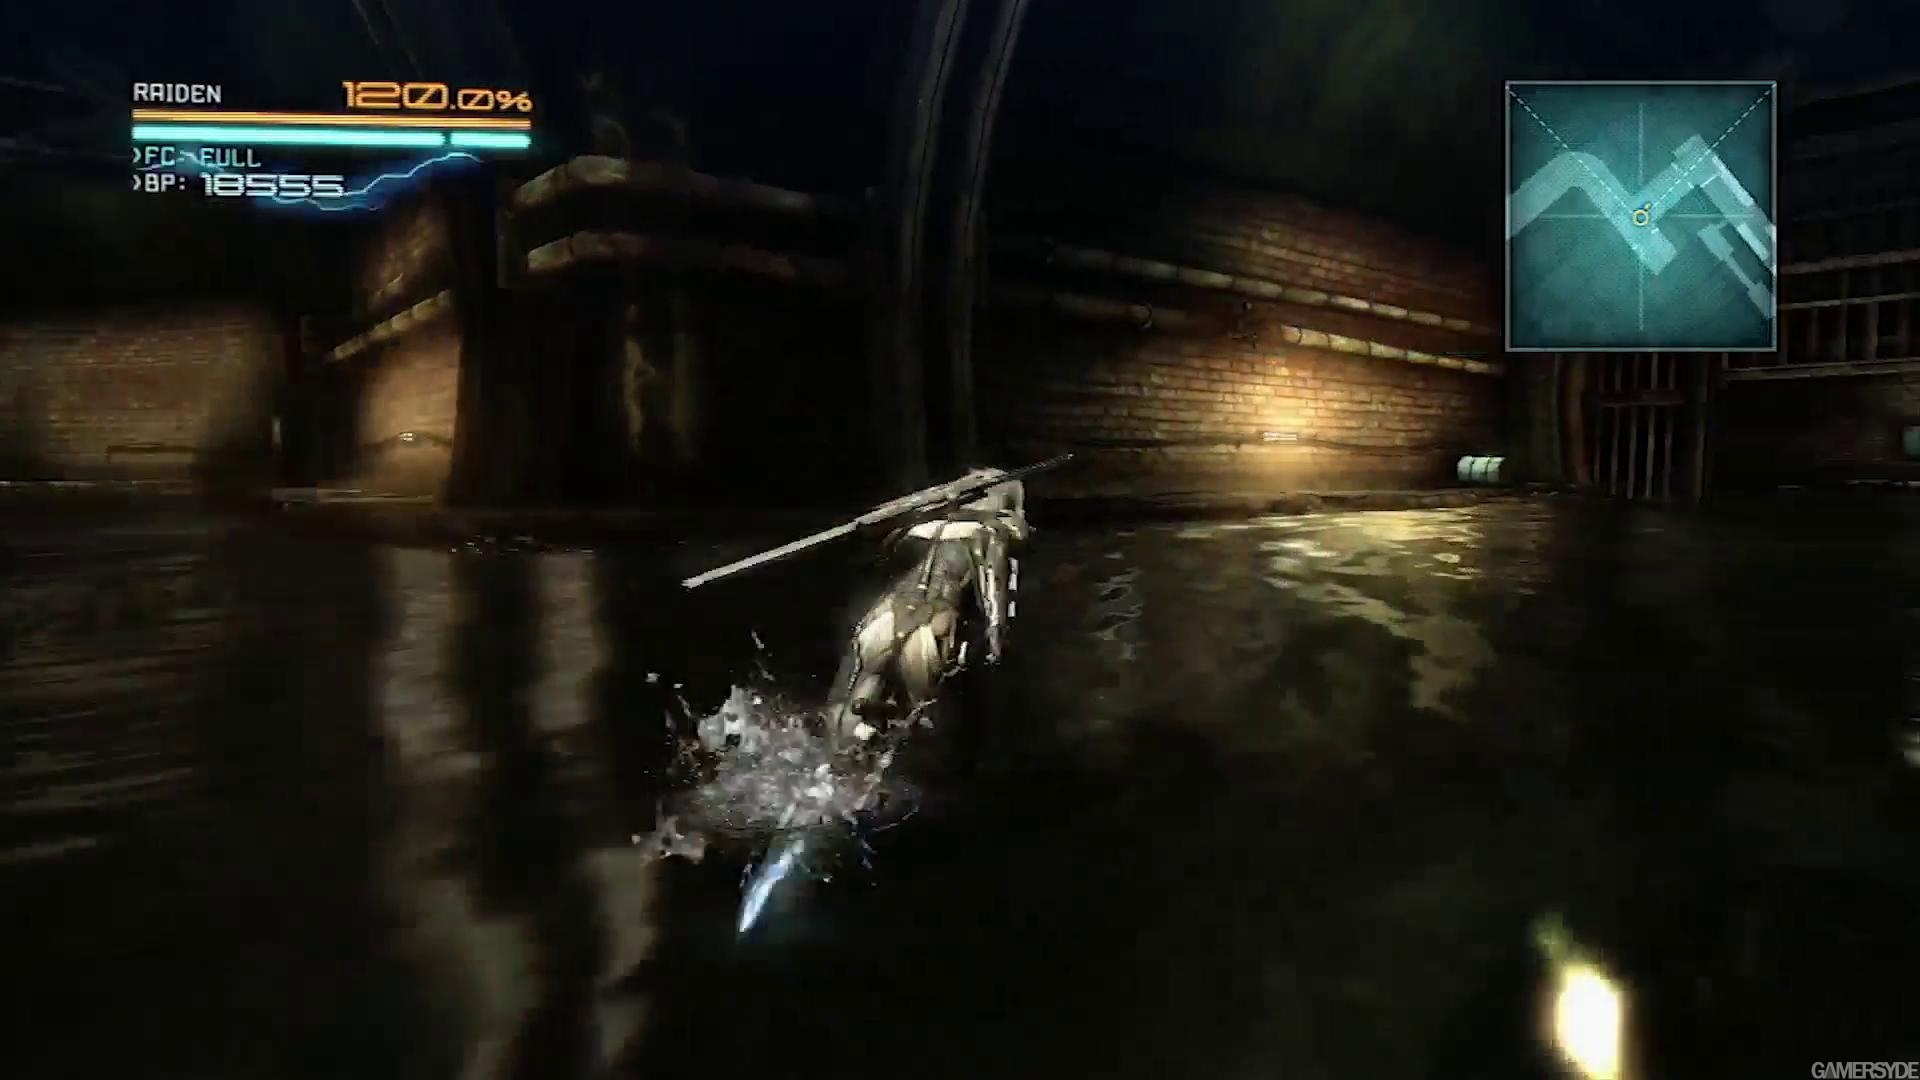 Metal Gear Rising: Revengeance - Gameplay #2 - High quality stream